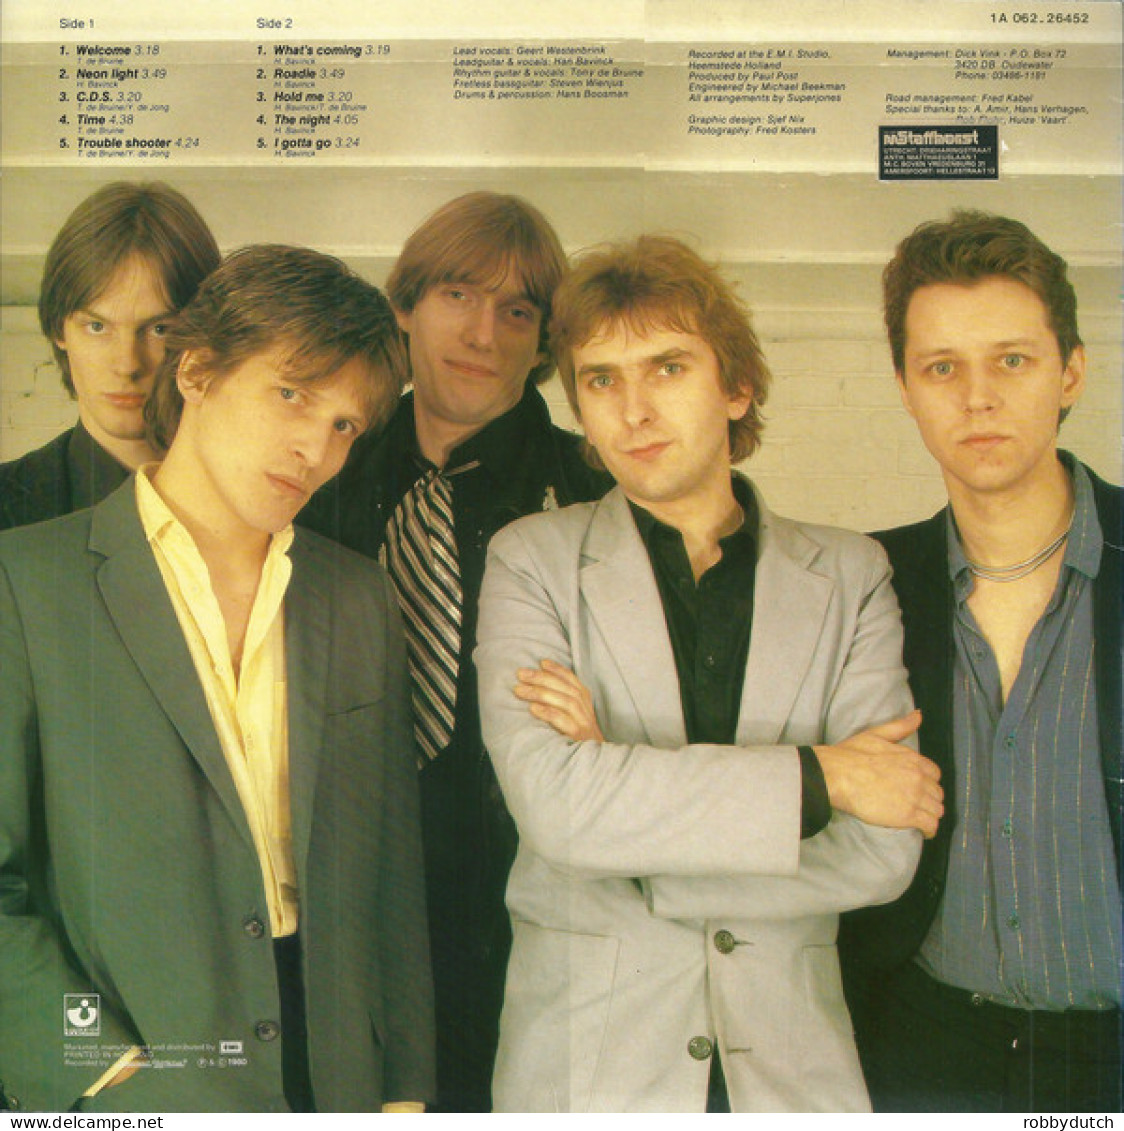 * LP *  SUPERJONES - SAME (Holland 1980 ) - Disco & Pop